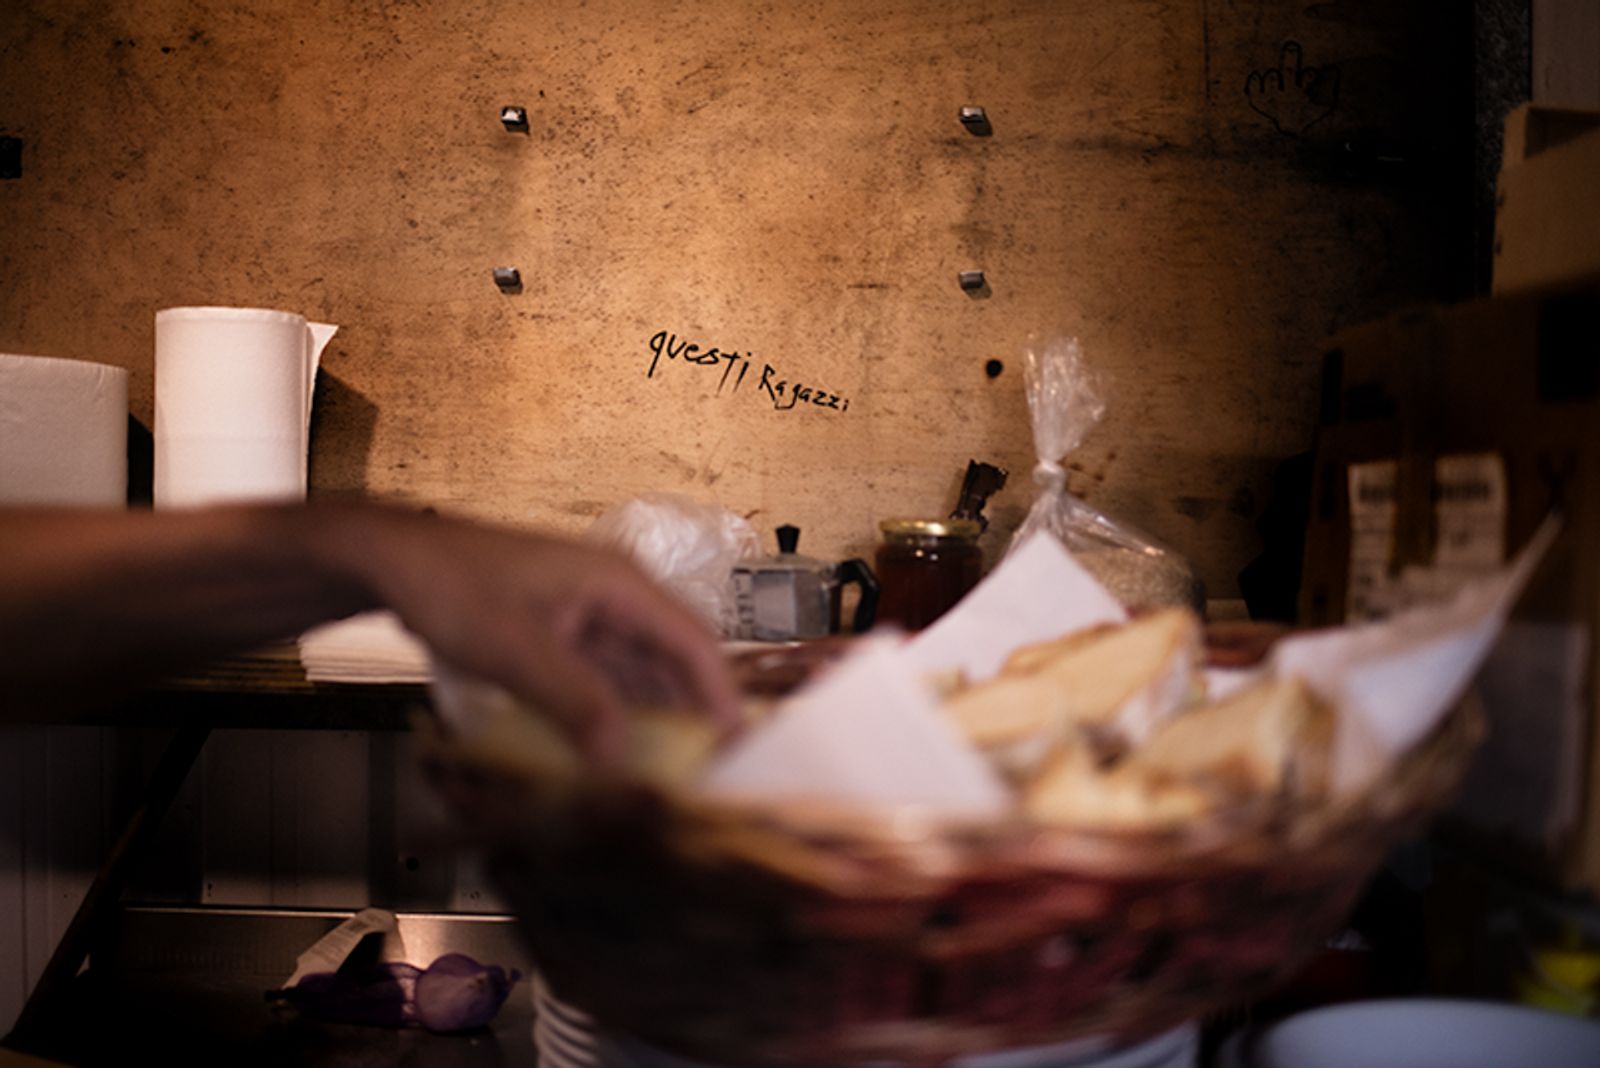 © Maria Giulia Trombini - "Thees guys", kitchen at Xr Home Base, Rome.